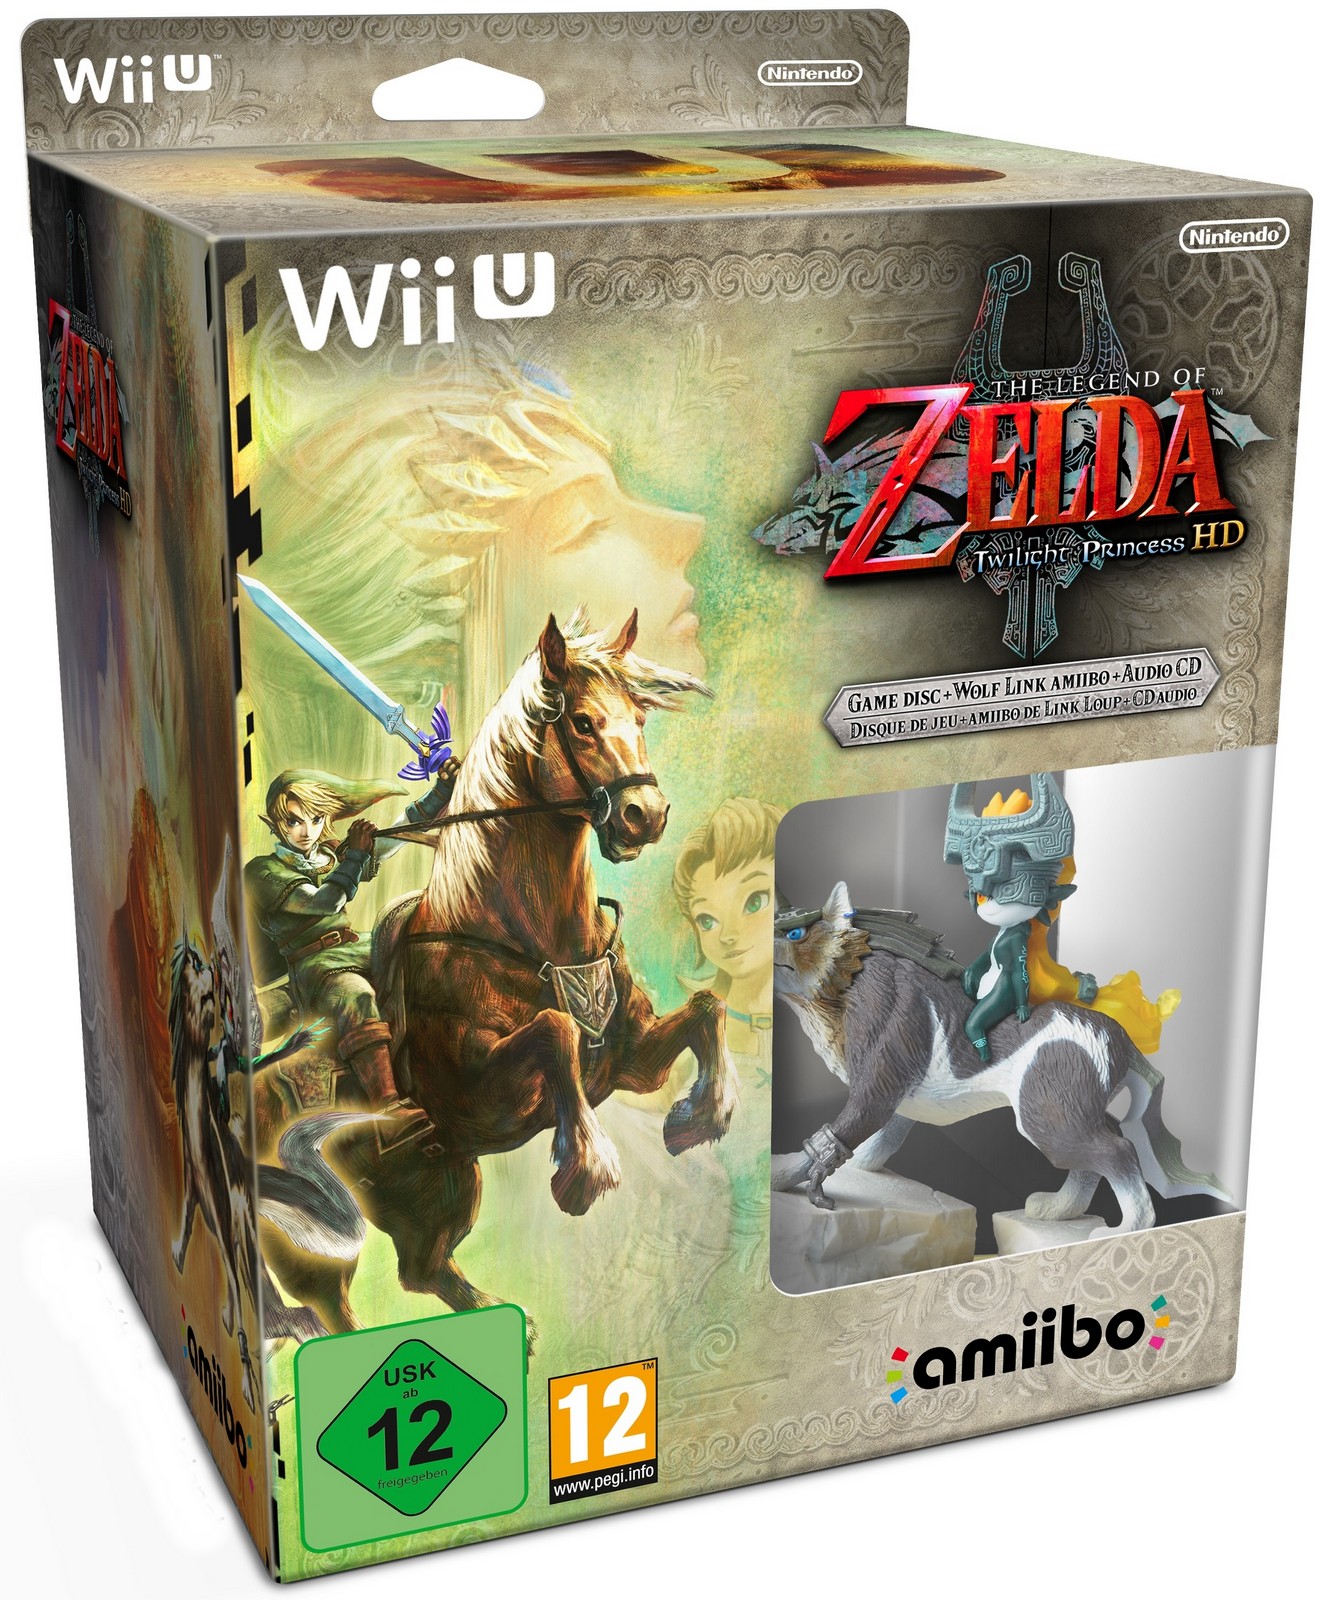 Wii U Legend of Zelda: Twilight Princess HD Limited Edition incl. Amiibo Wolf Link